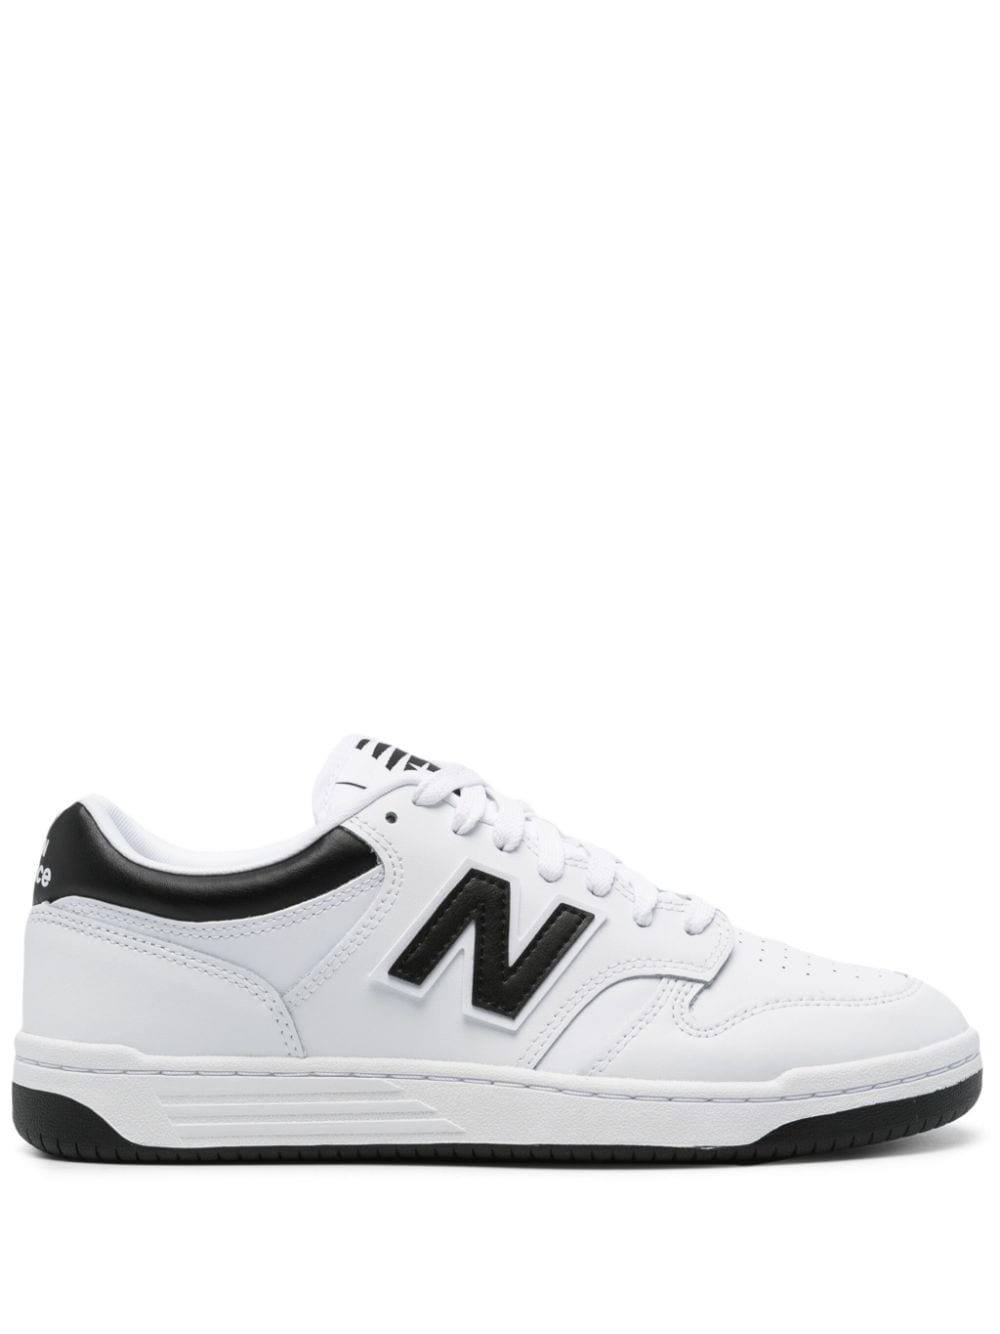 New Balance 480 leather sneakers - White von New Balance